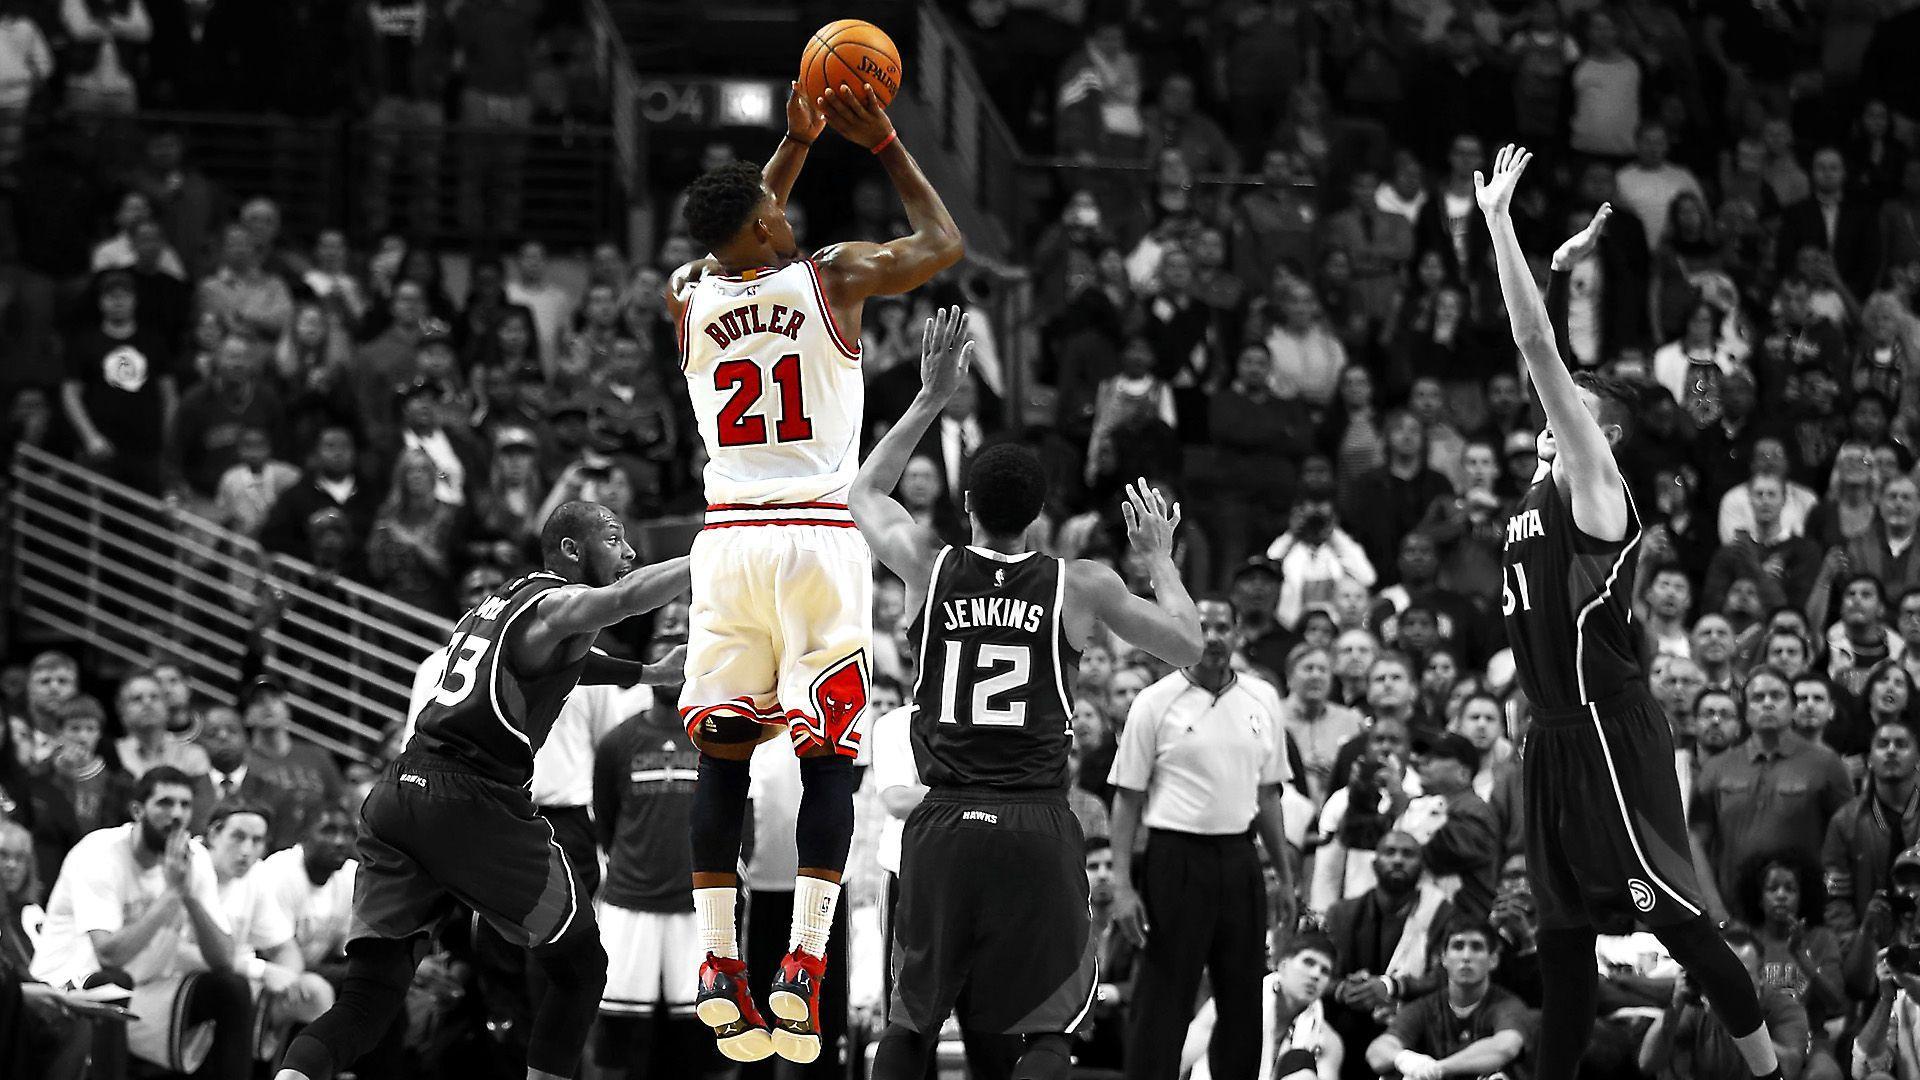 NBA Wallpaper HD. HD Wallpaper, Background, Image, Art Photo